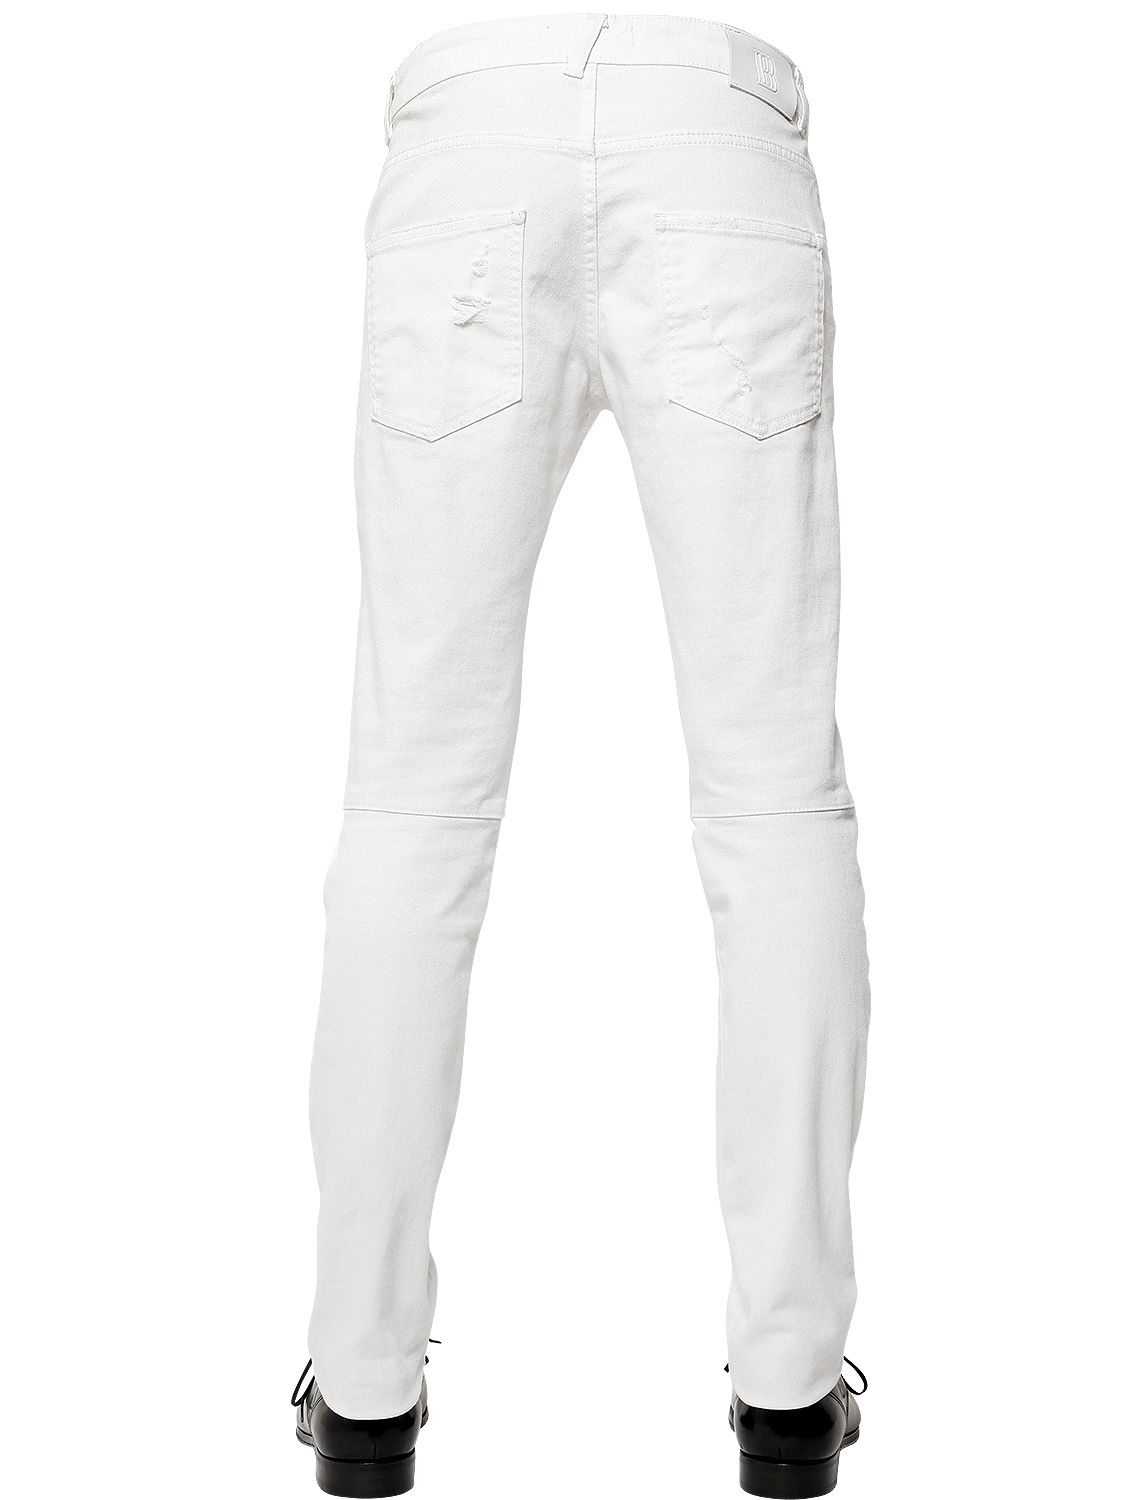 Lyst - Balmain 16cm Destroyed Stretch Denim Biker Jeans in White for Men